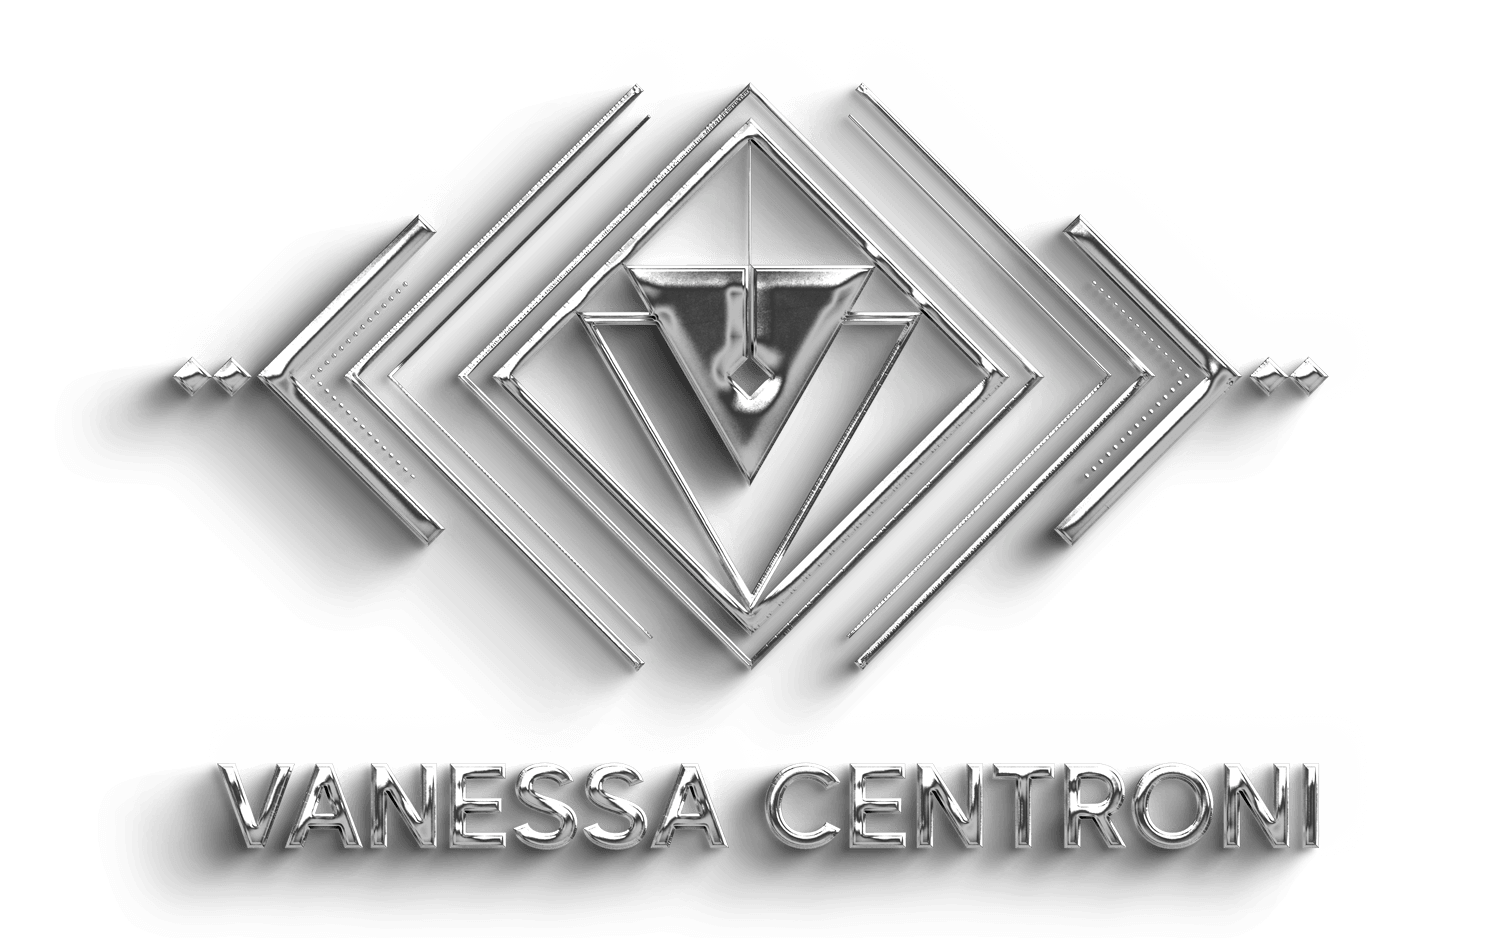 Vanessa-Centroni-Argent